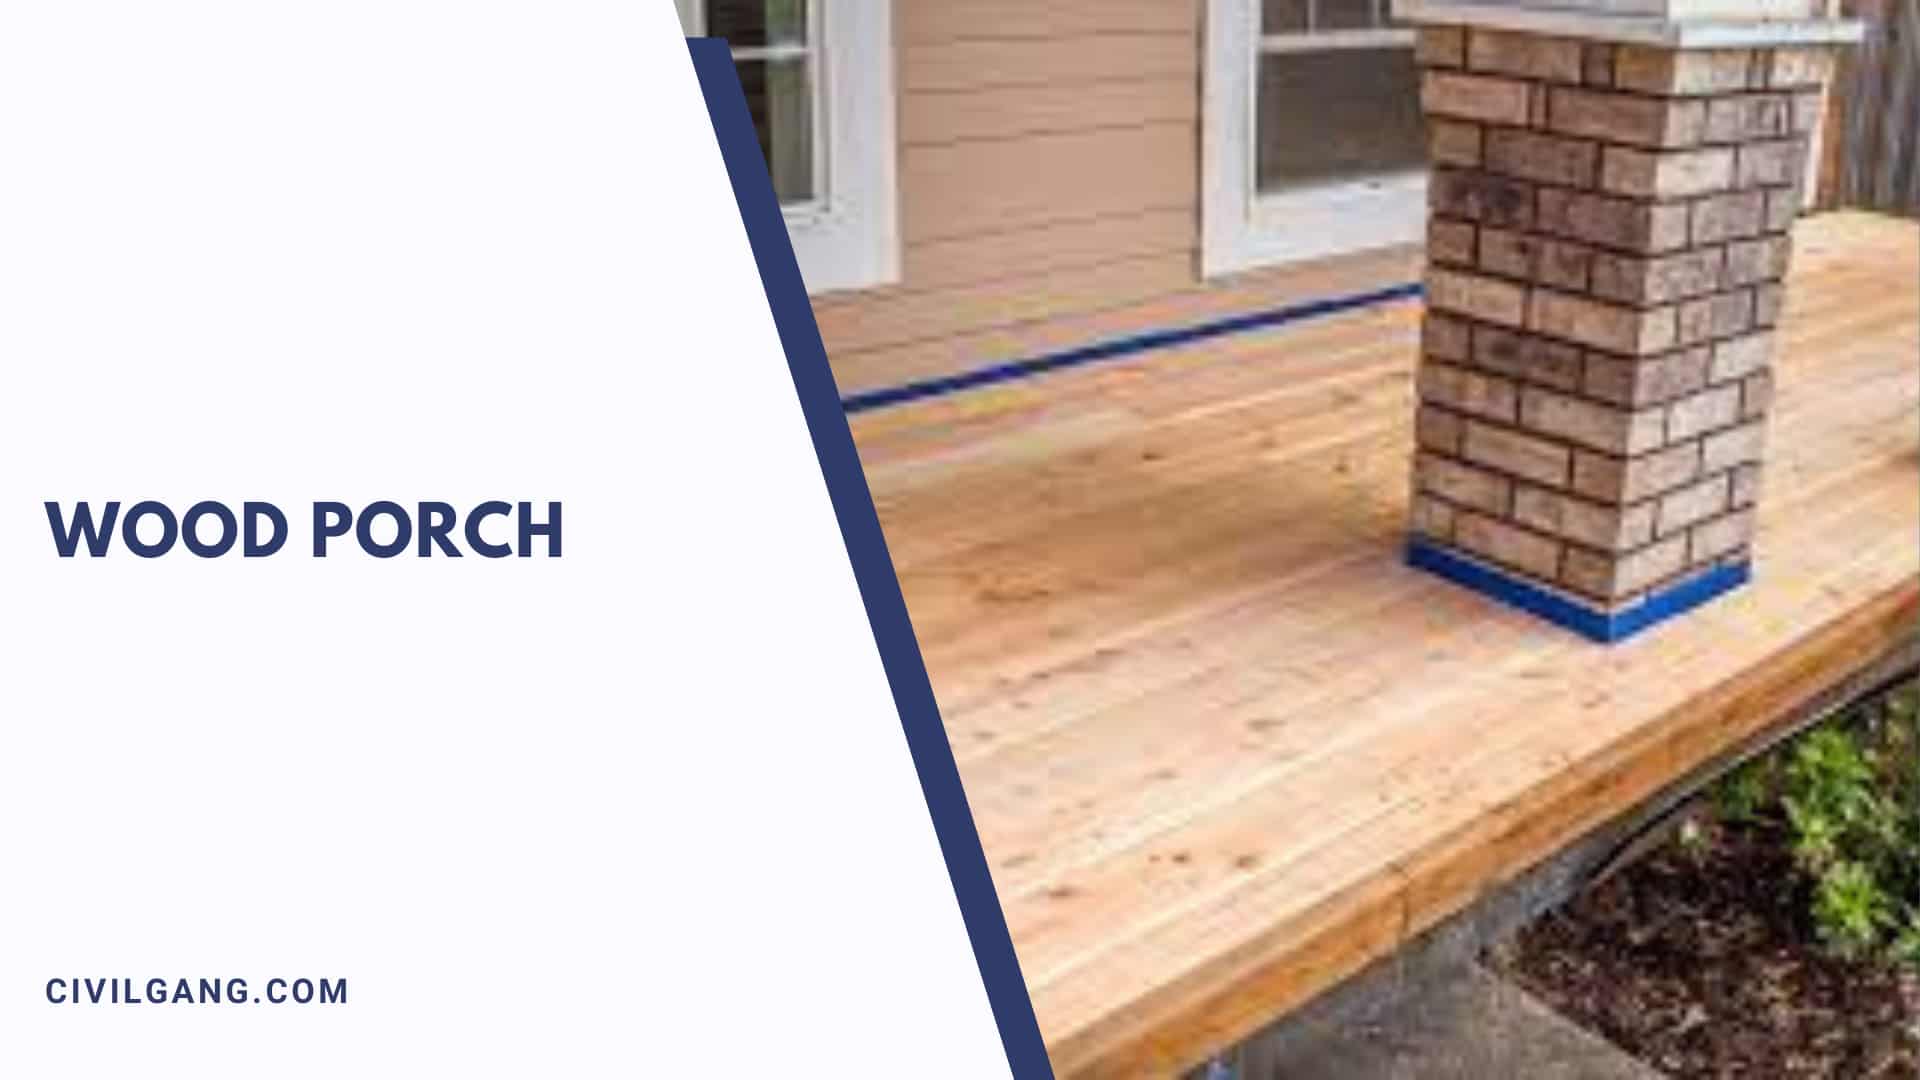 Wood porch